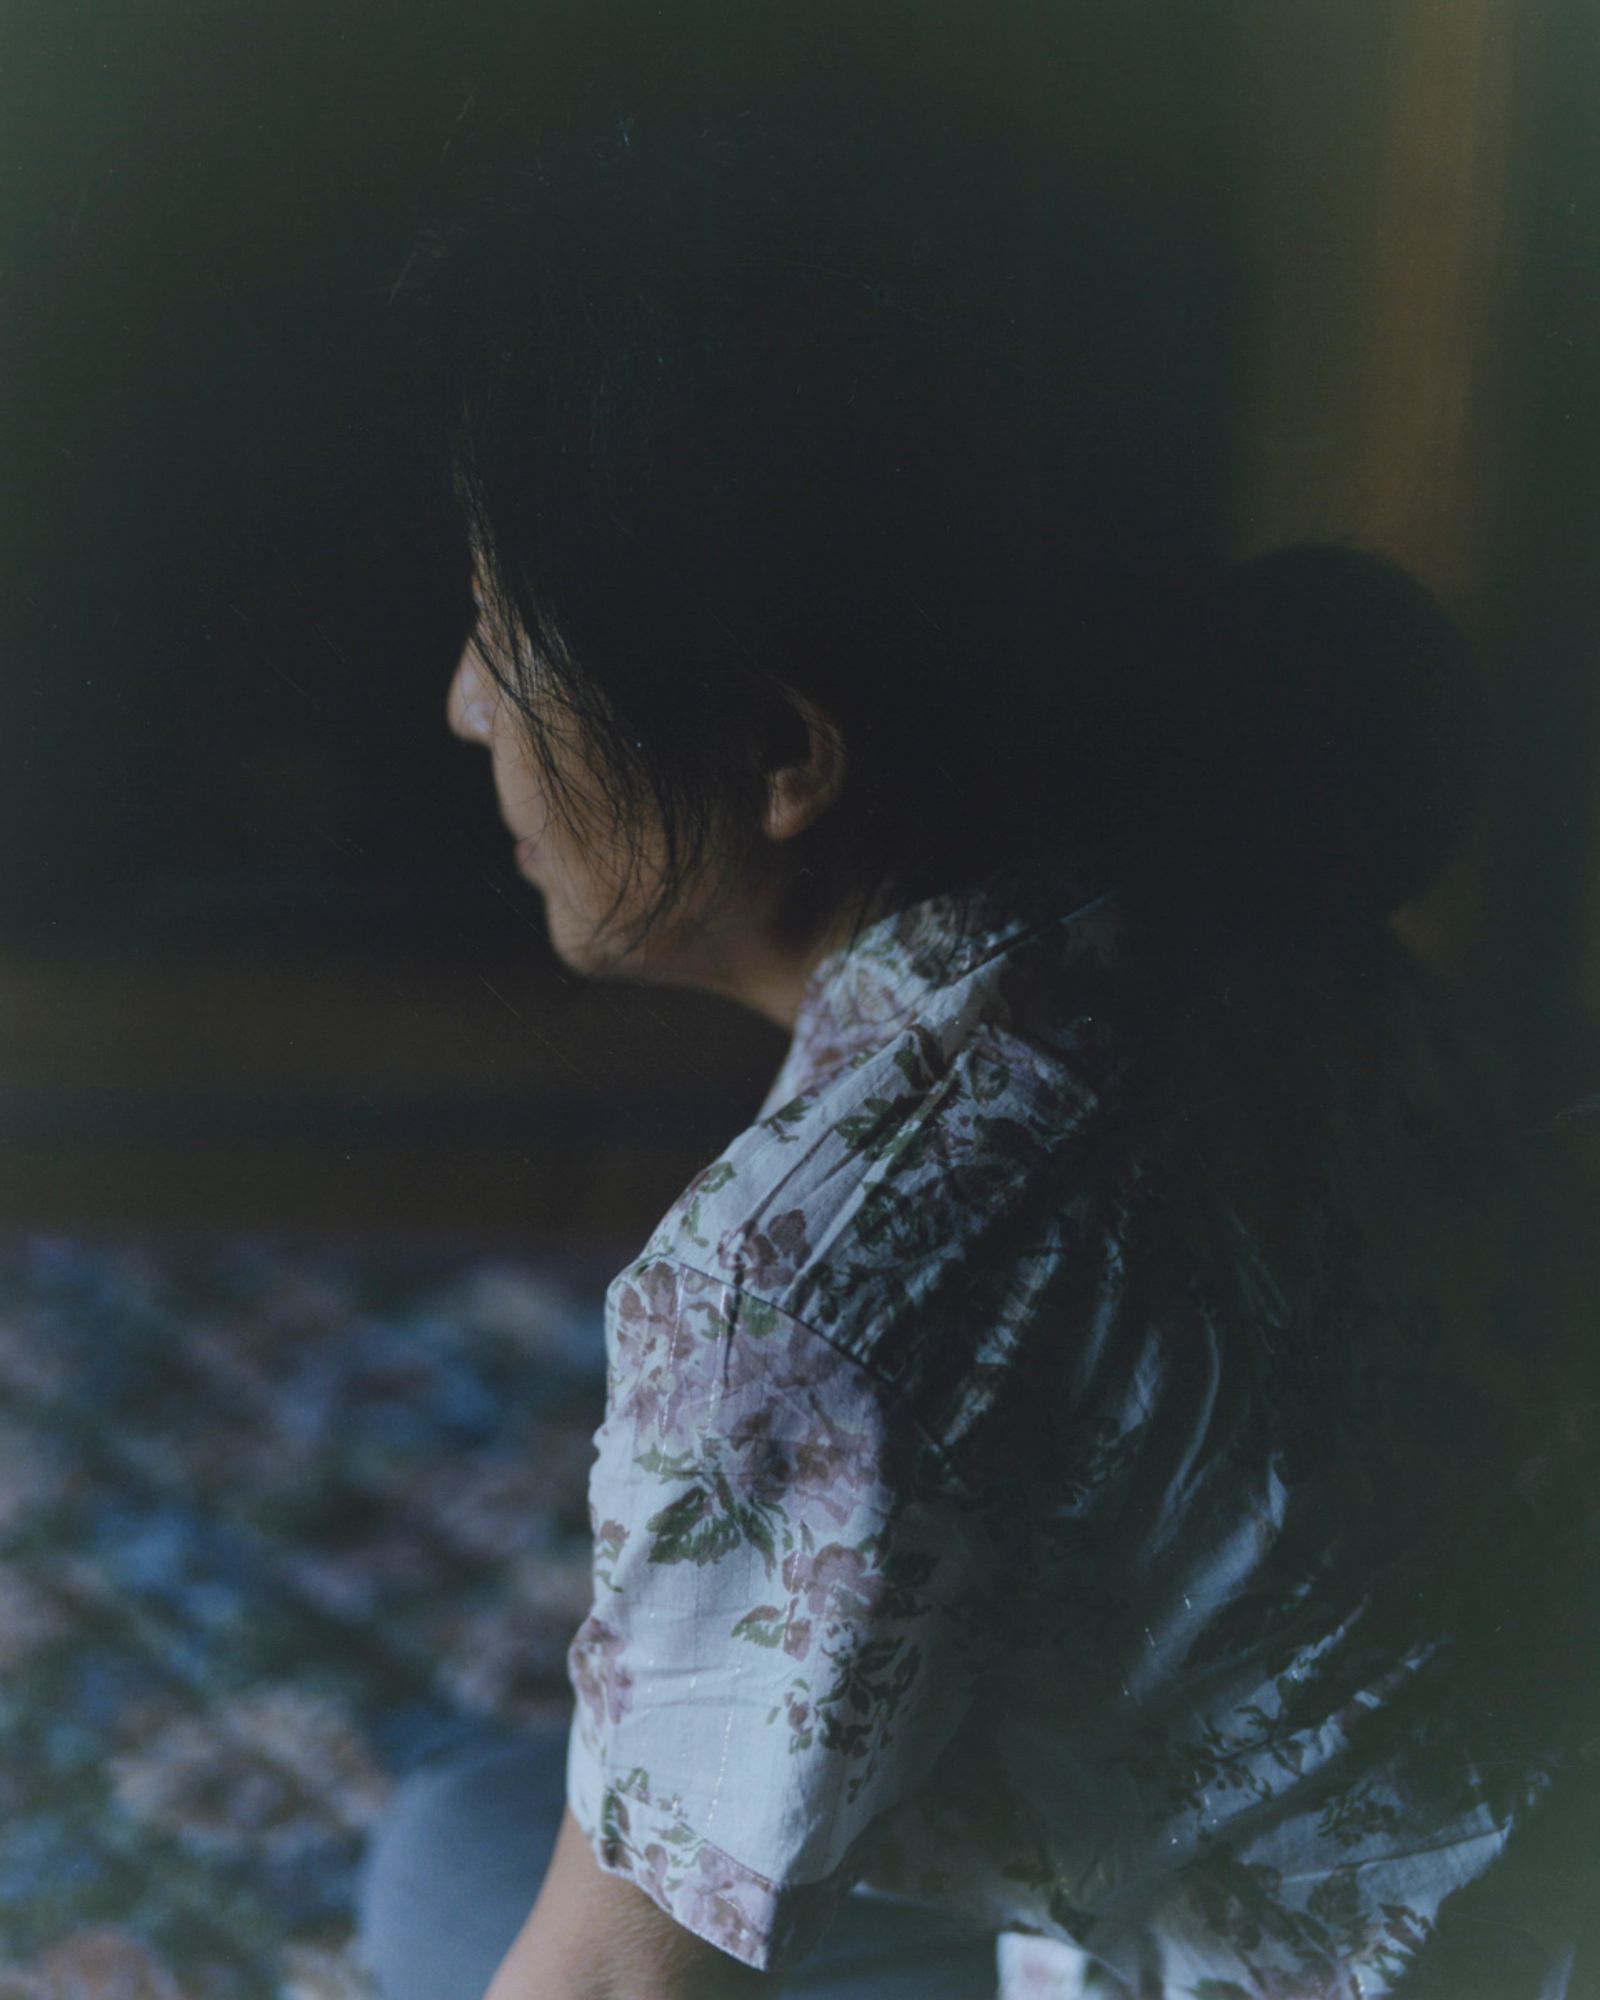 © Kashiwada Tetsuo - Image from the WARASONO photography project